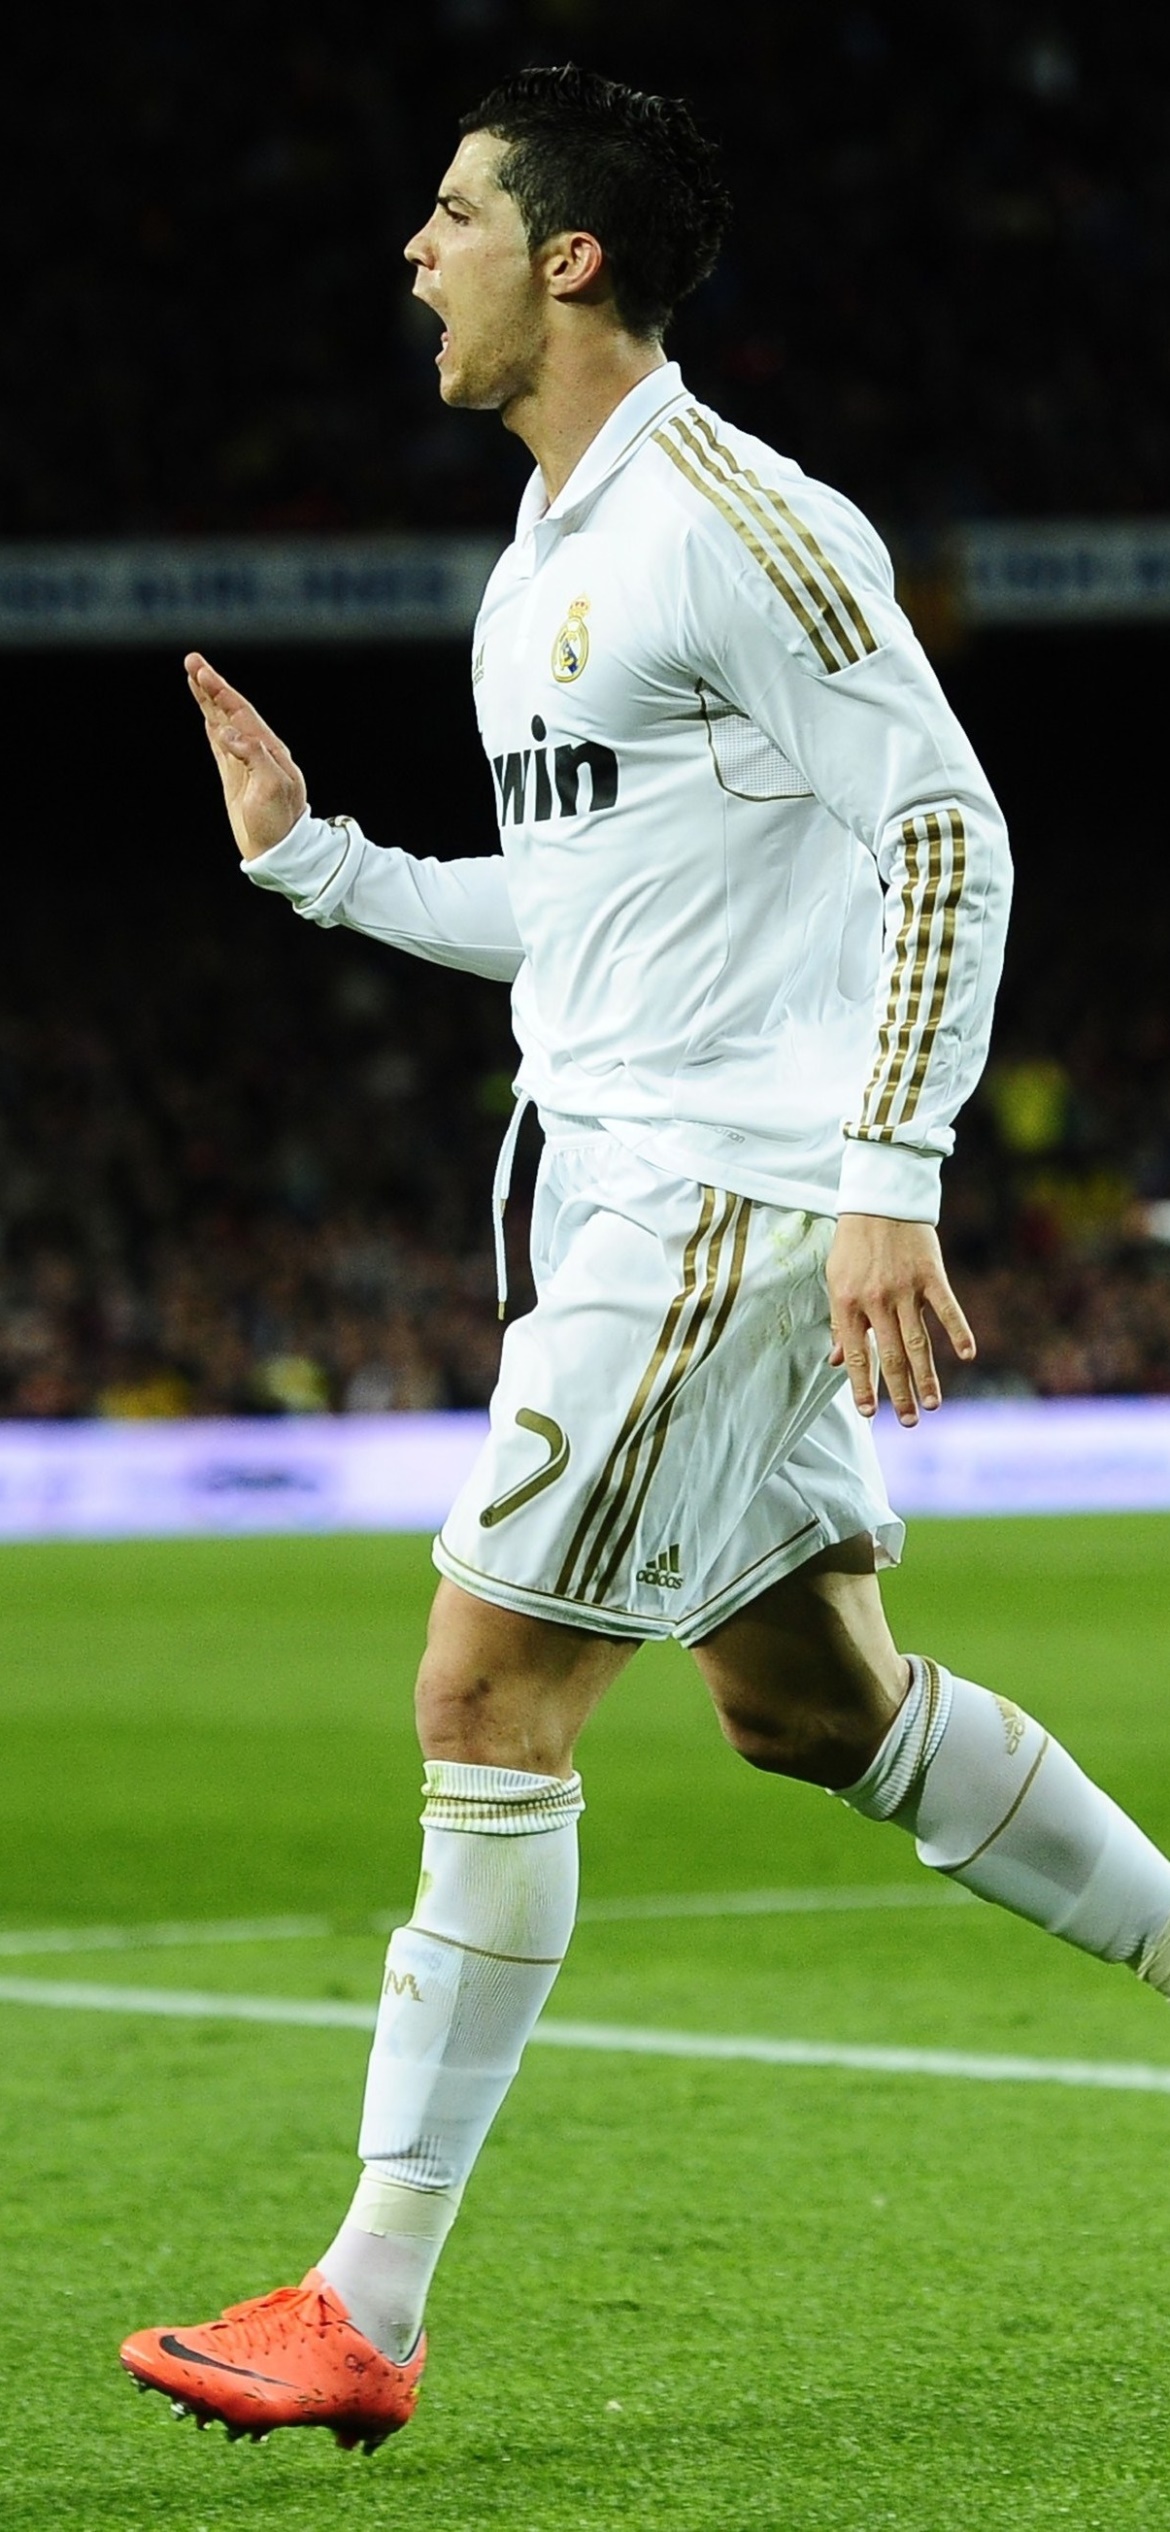 Wallpaper / Sports Cristiano Ronaldo Phone Wallpaper, Real Madrid C.F., 1170x2532 free download